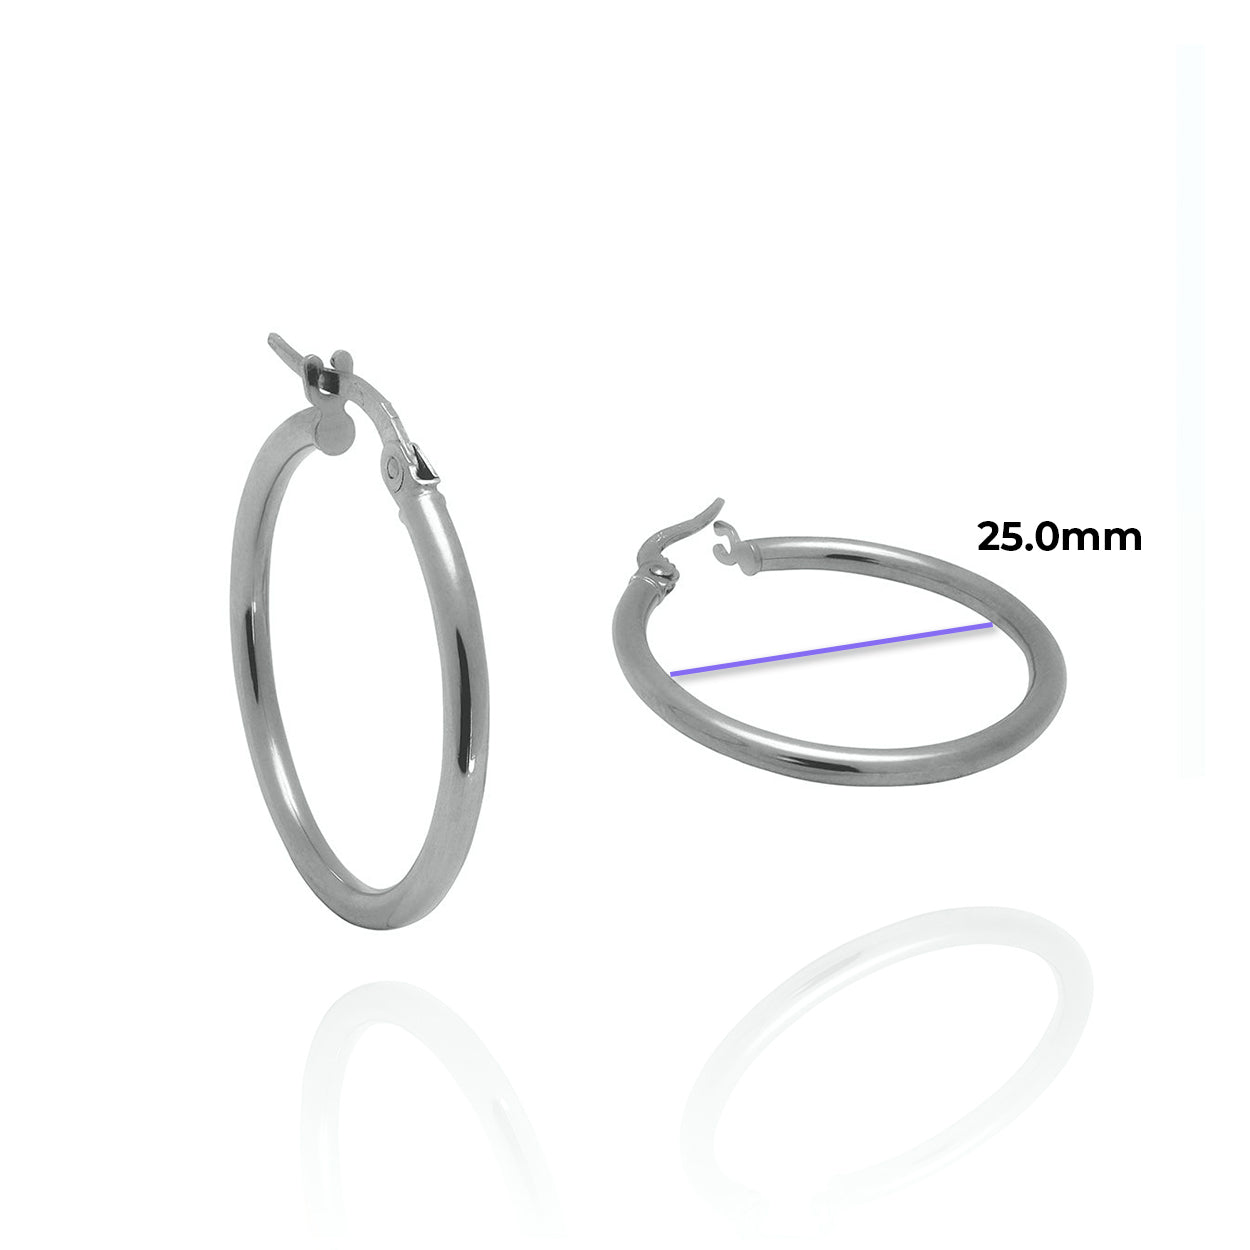 Medium 2mm Tube Solid Gold Hoop Earrings White with Measurement 25.0mm